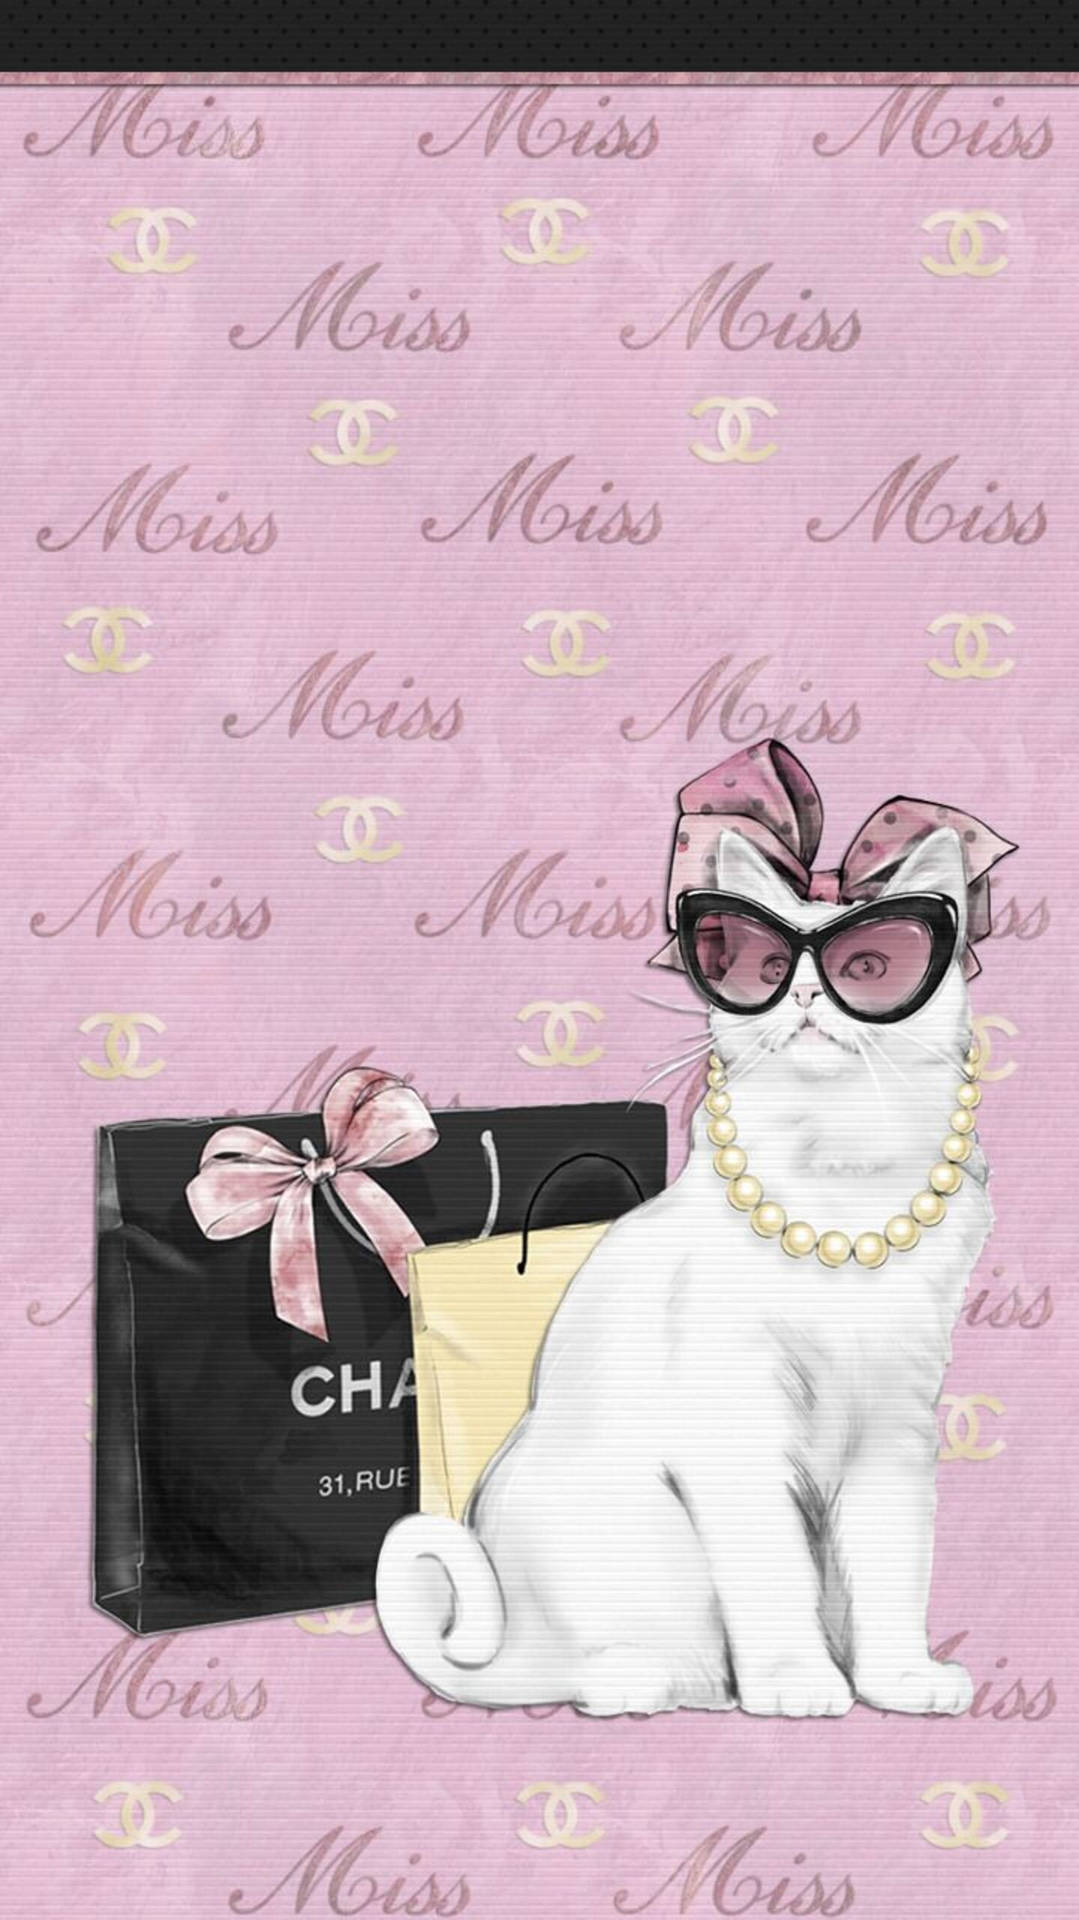 Sesuperchic Ut I En Vit Kattmotiv-outfit Från Chanel På Ditt Datorskärms- Eller Mobilbakgrund. Wallpaper